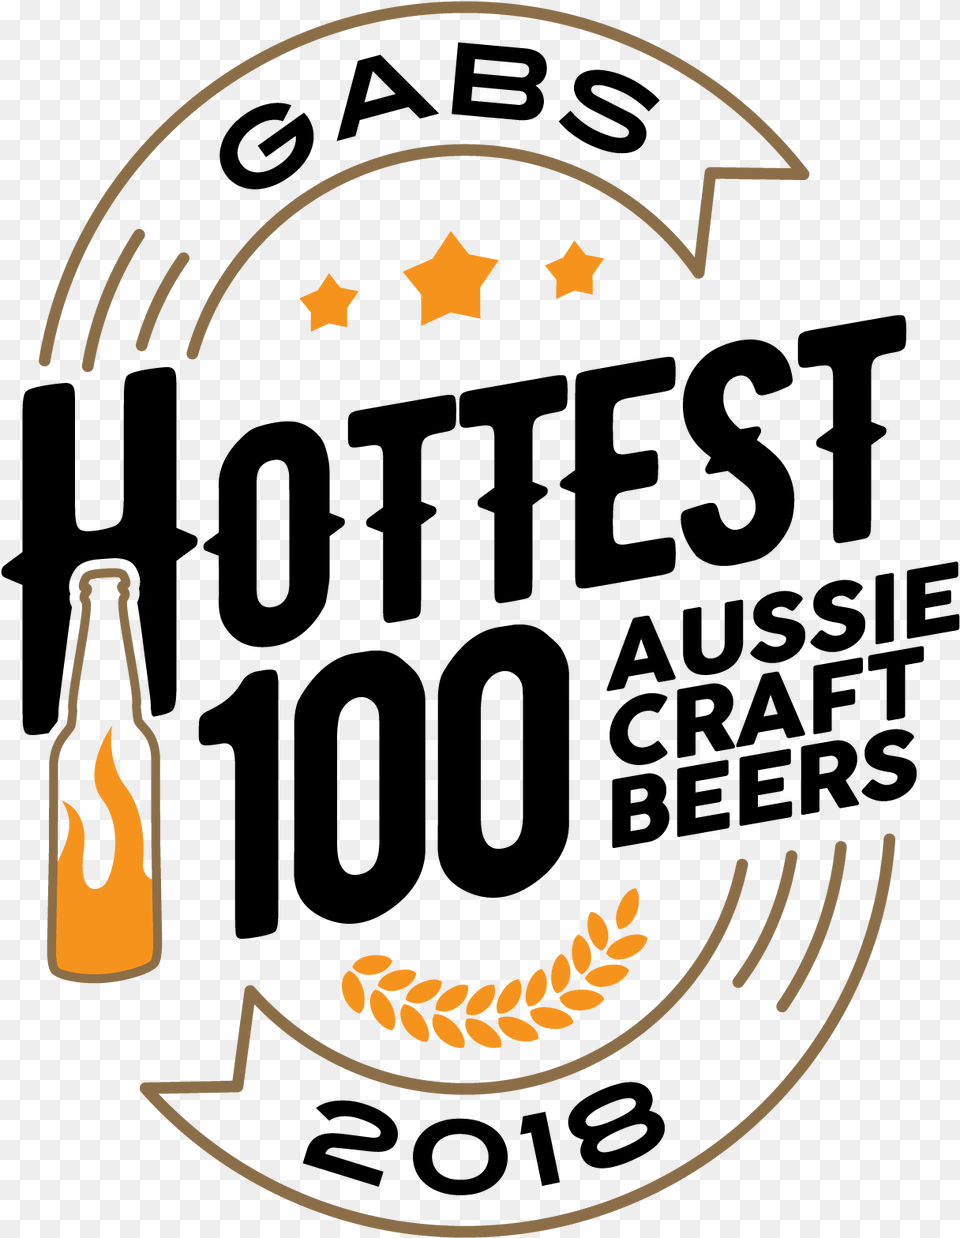 Hottest 100 Aussie Craft Beers, Alcohol, Beer, Beverage, Symbol Free Png